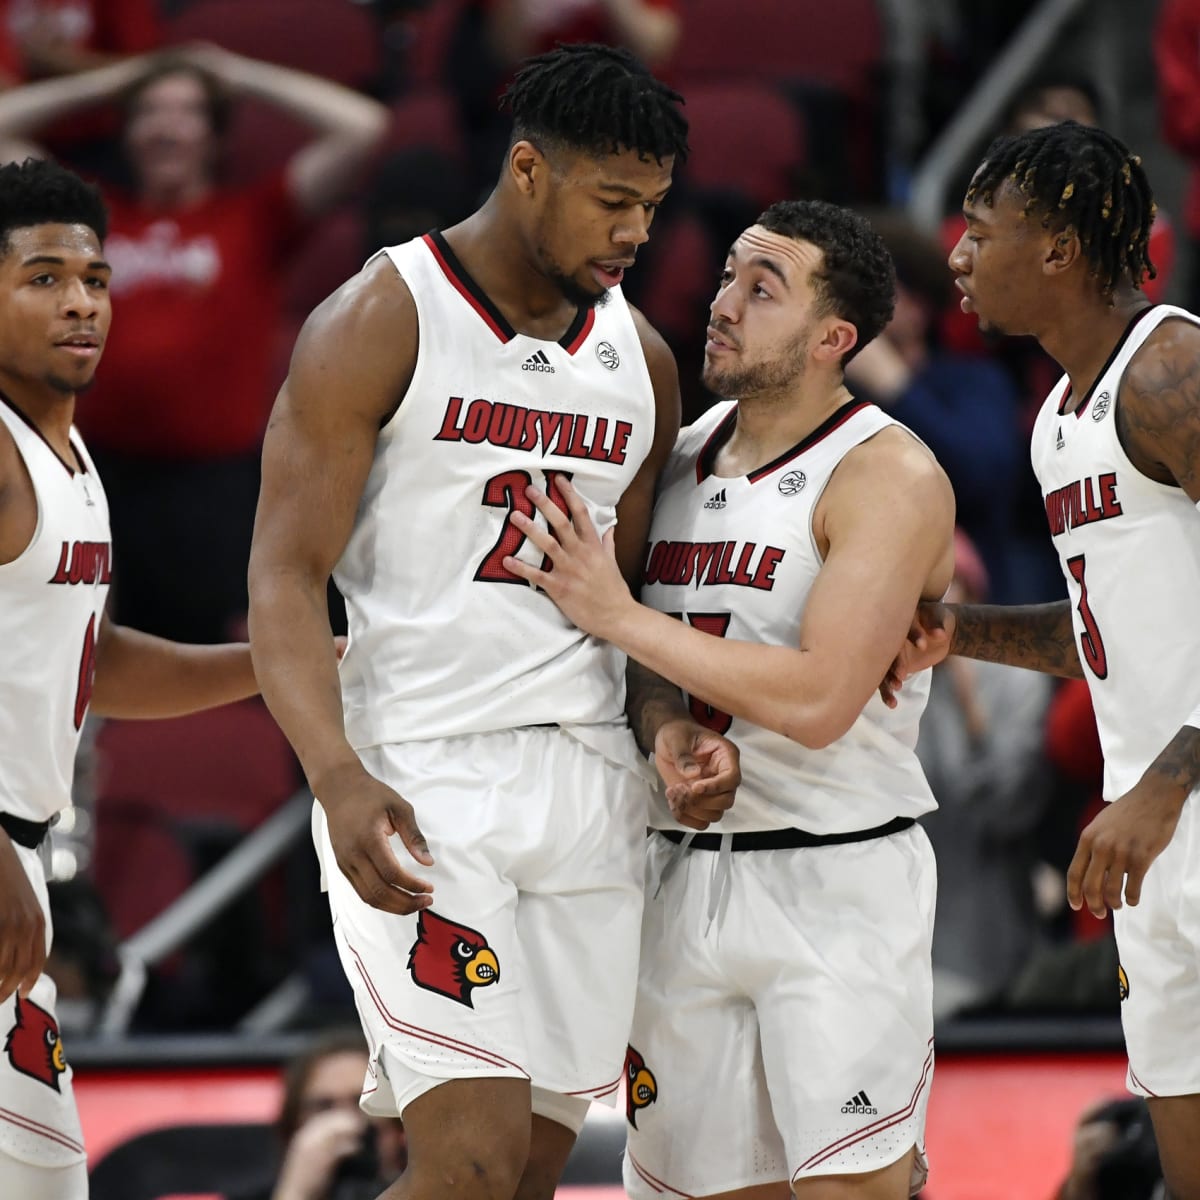 Louisville basketball wants new start, save season at ACC tournament